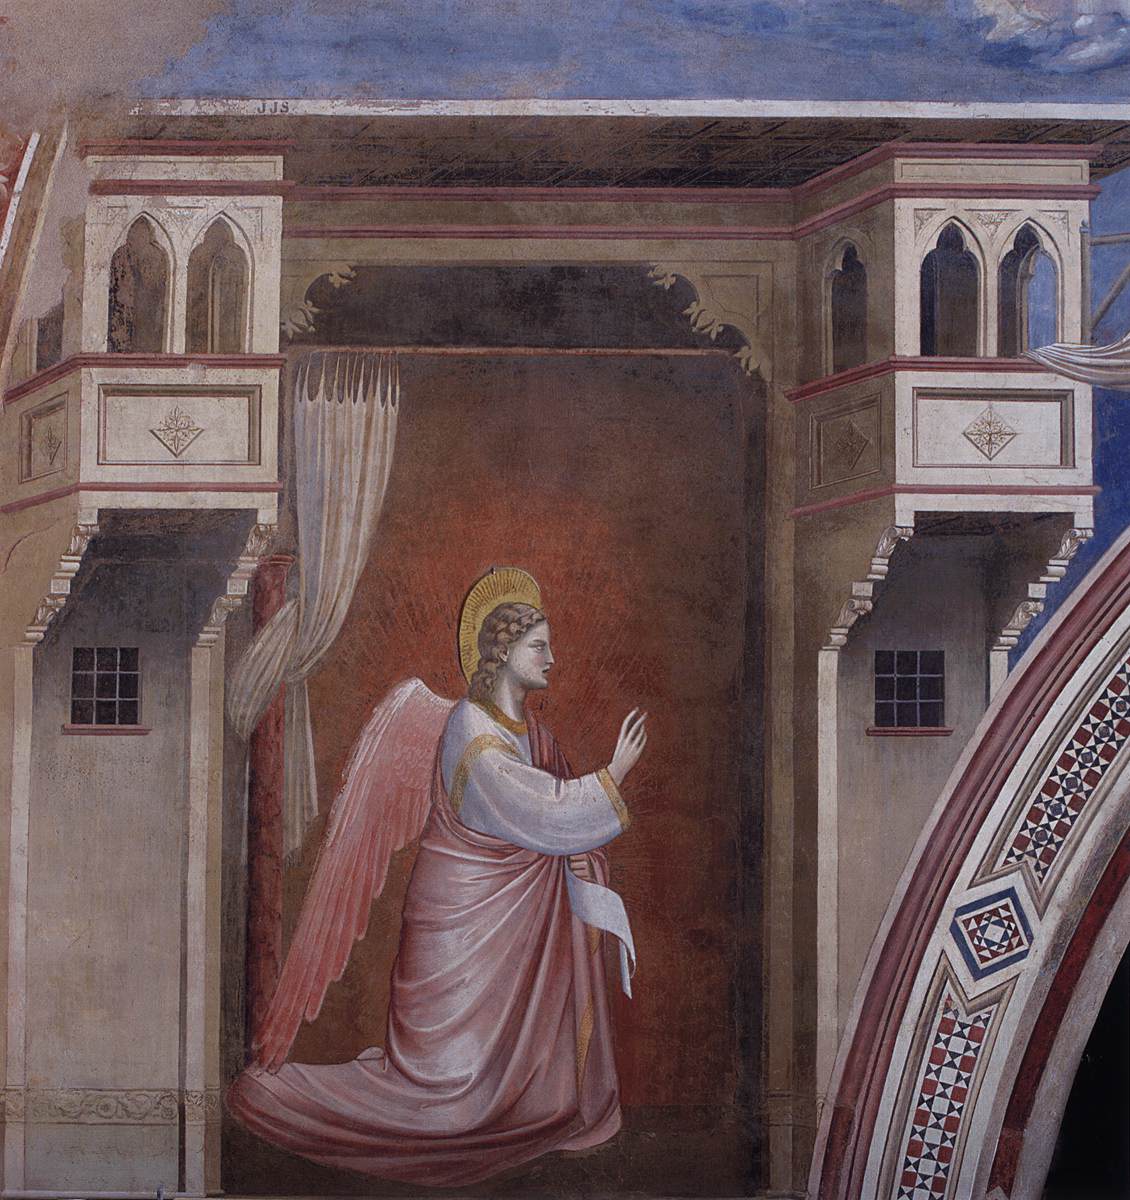 No 14 The Annunciation: The Angel Gabriel Sent by God